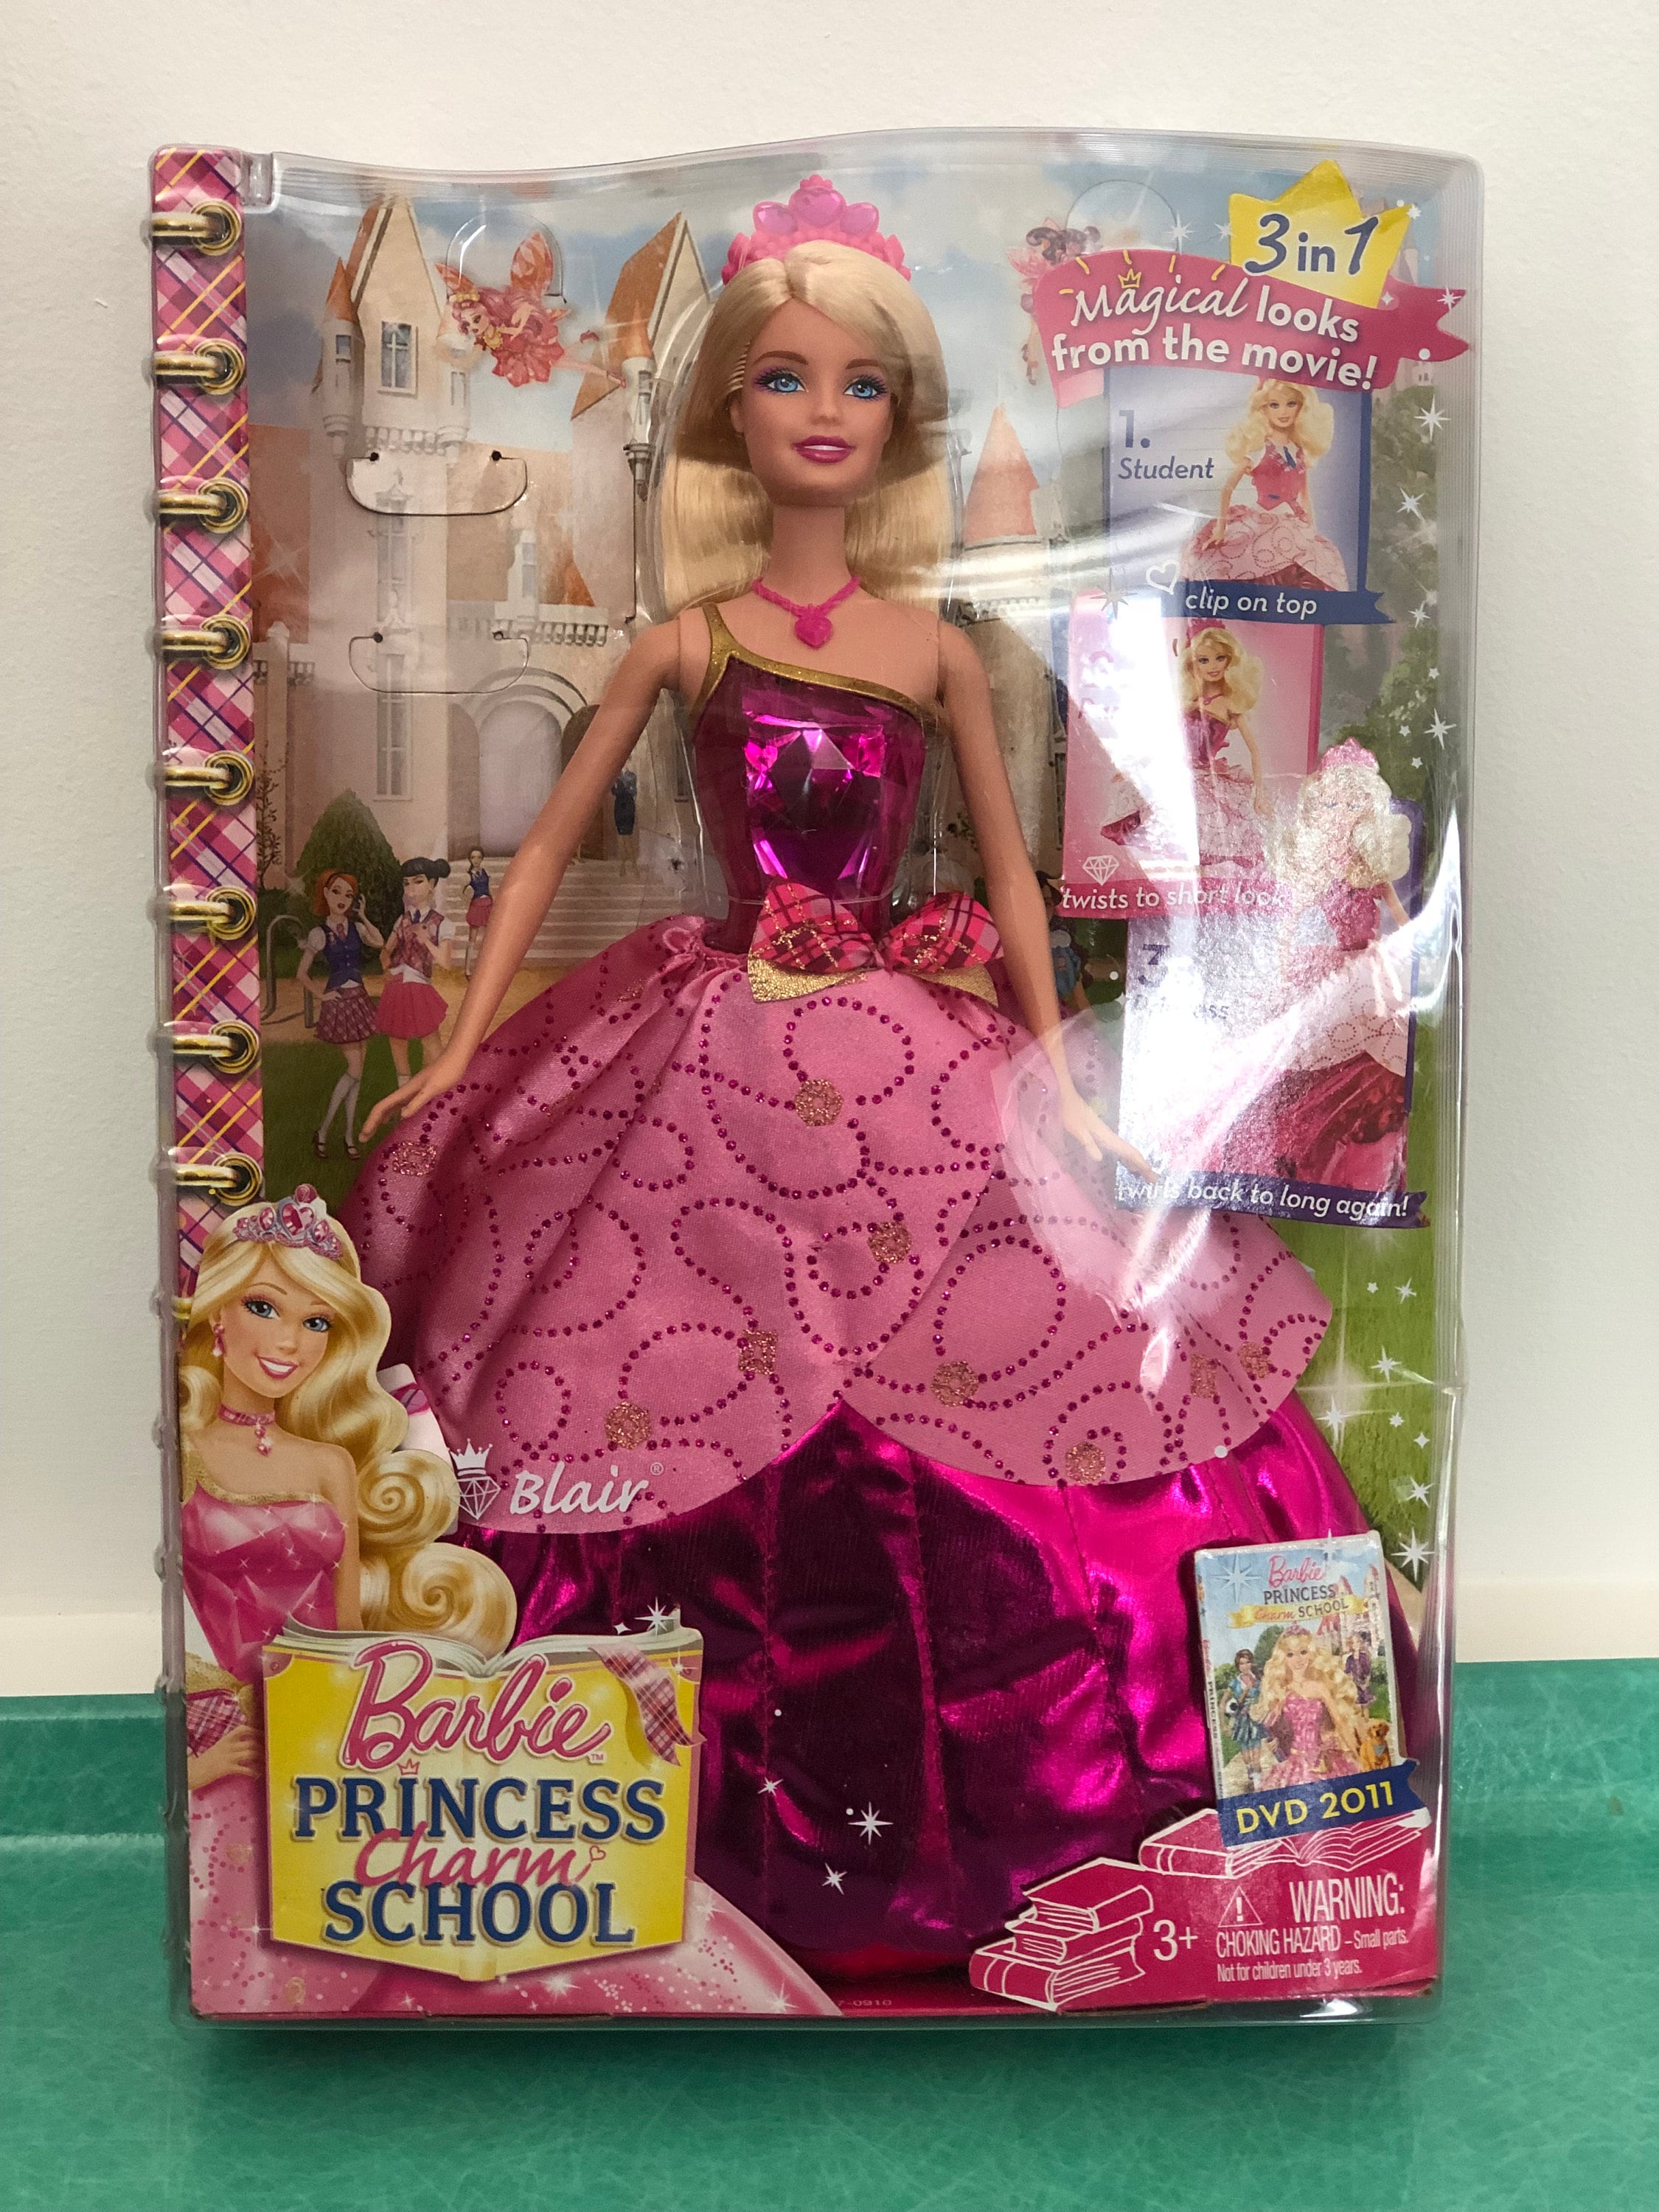 Barbie Princess Charm School Blair Doll, in Original Box. - Etsy 日本